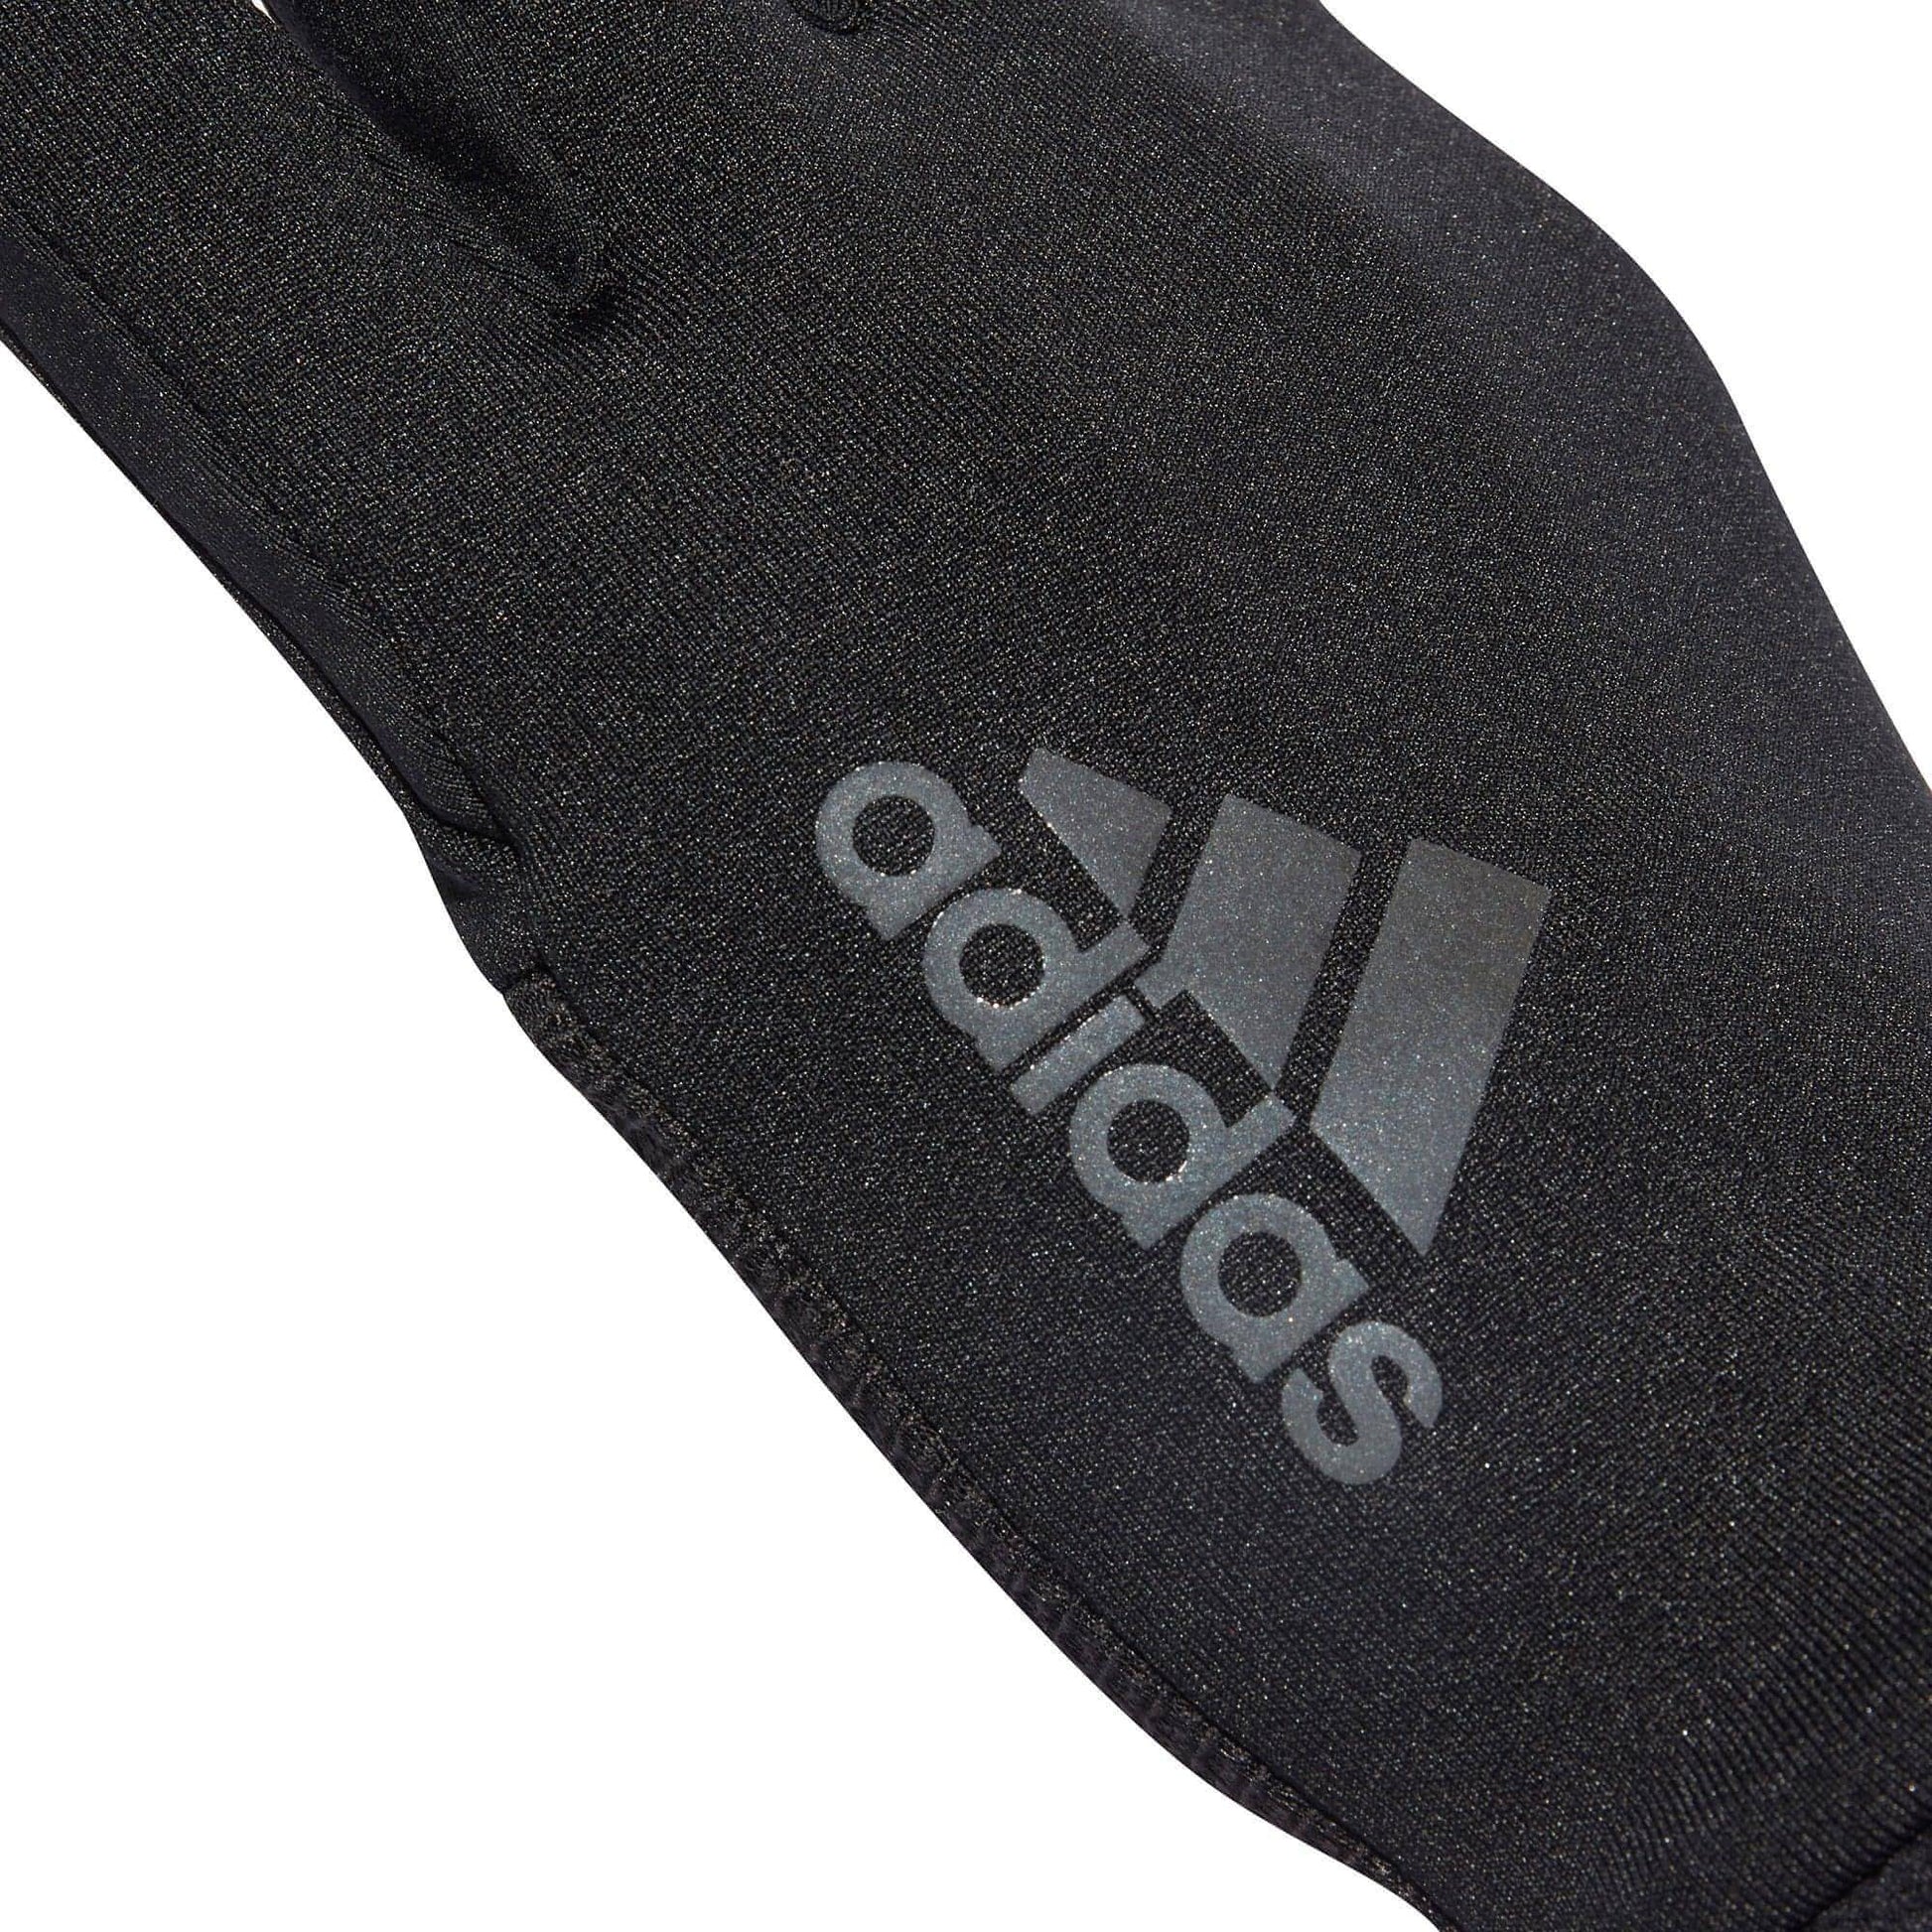 Adidas Coldrdy Gloves Hg8456 Details